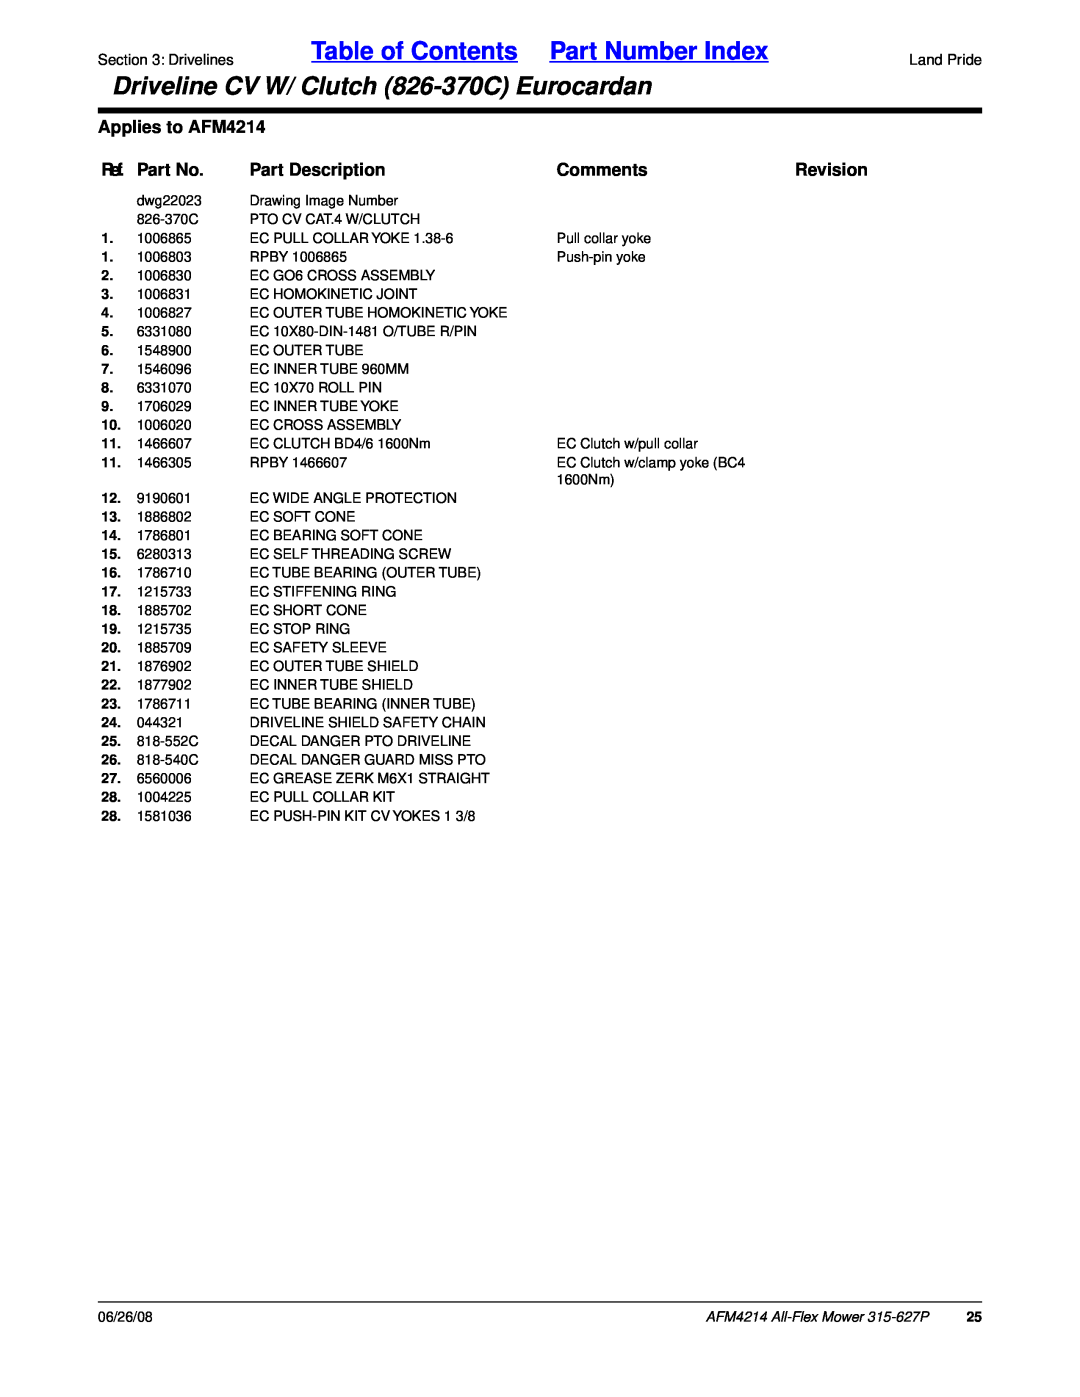 Land Pride Table of Contents Part Number Index, Driveline CV W/ Clutch 826-370CEurocardan, Applies to AFM4214, Comments 